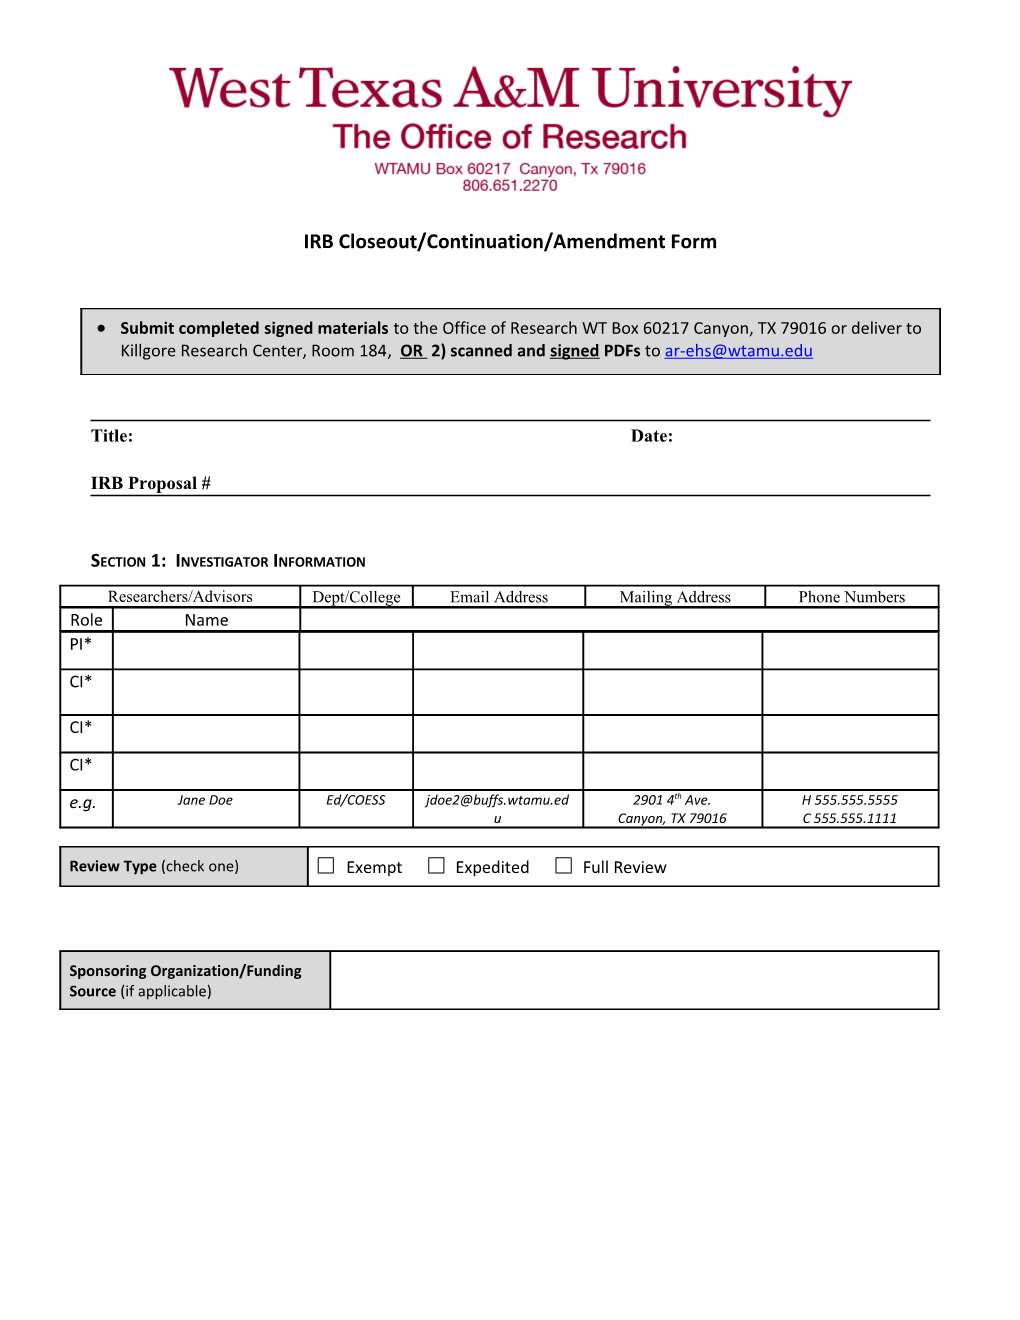 IRB Closeout/Continuation/Amendment Form